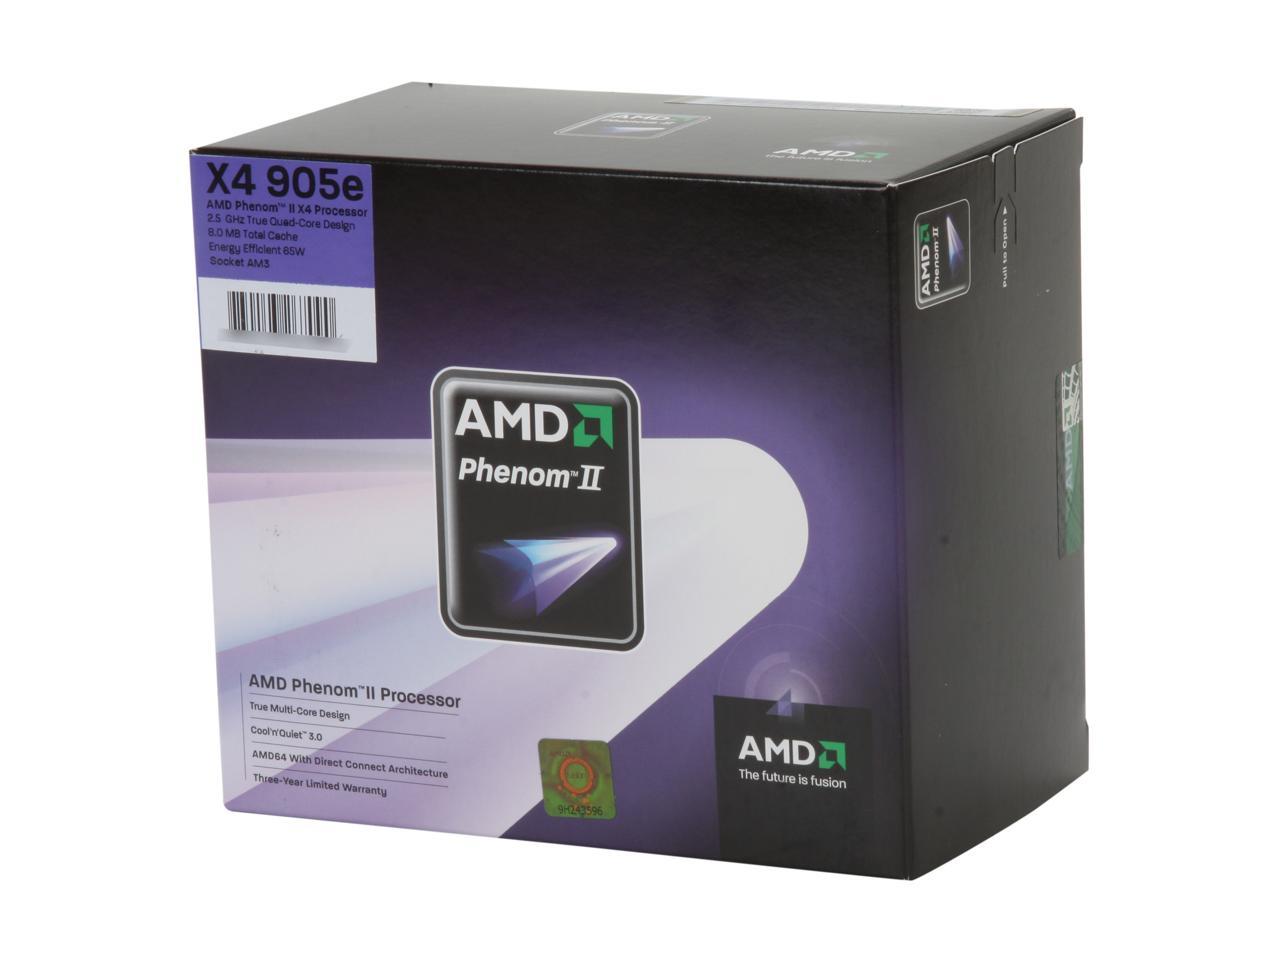 AMD Phenom II X4 905e 2.5 GHz Quad-core CPU Processor 65W HD905EOCK4DGM/HD905EOCK4DGI Socket AM3 